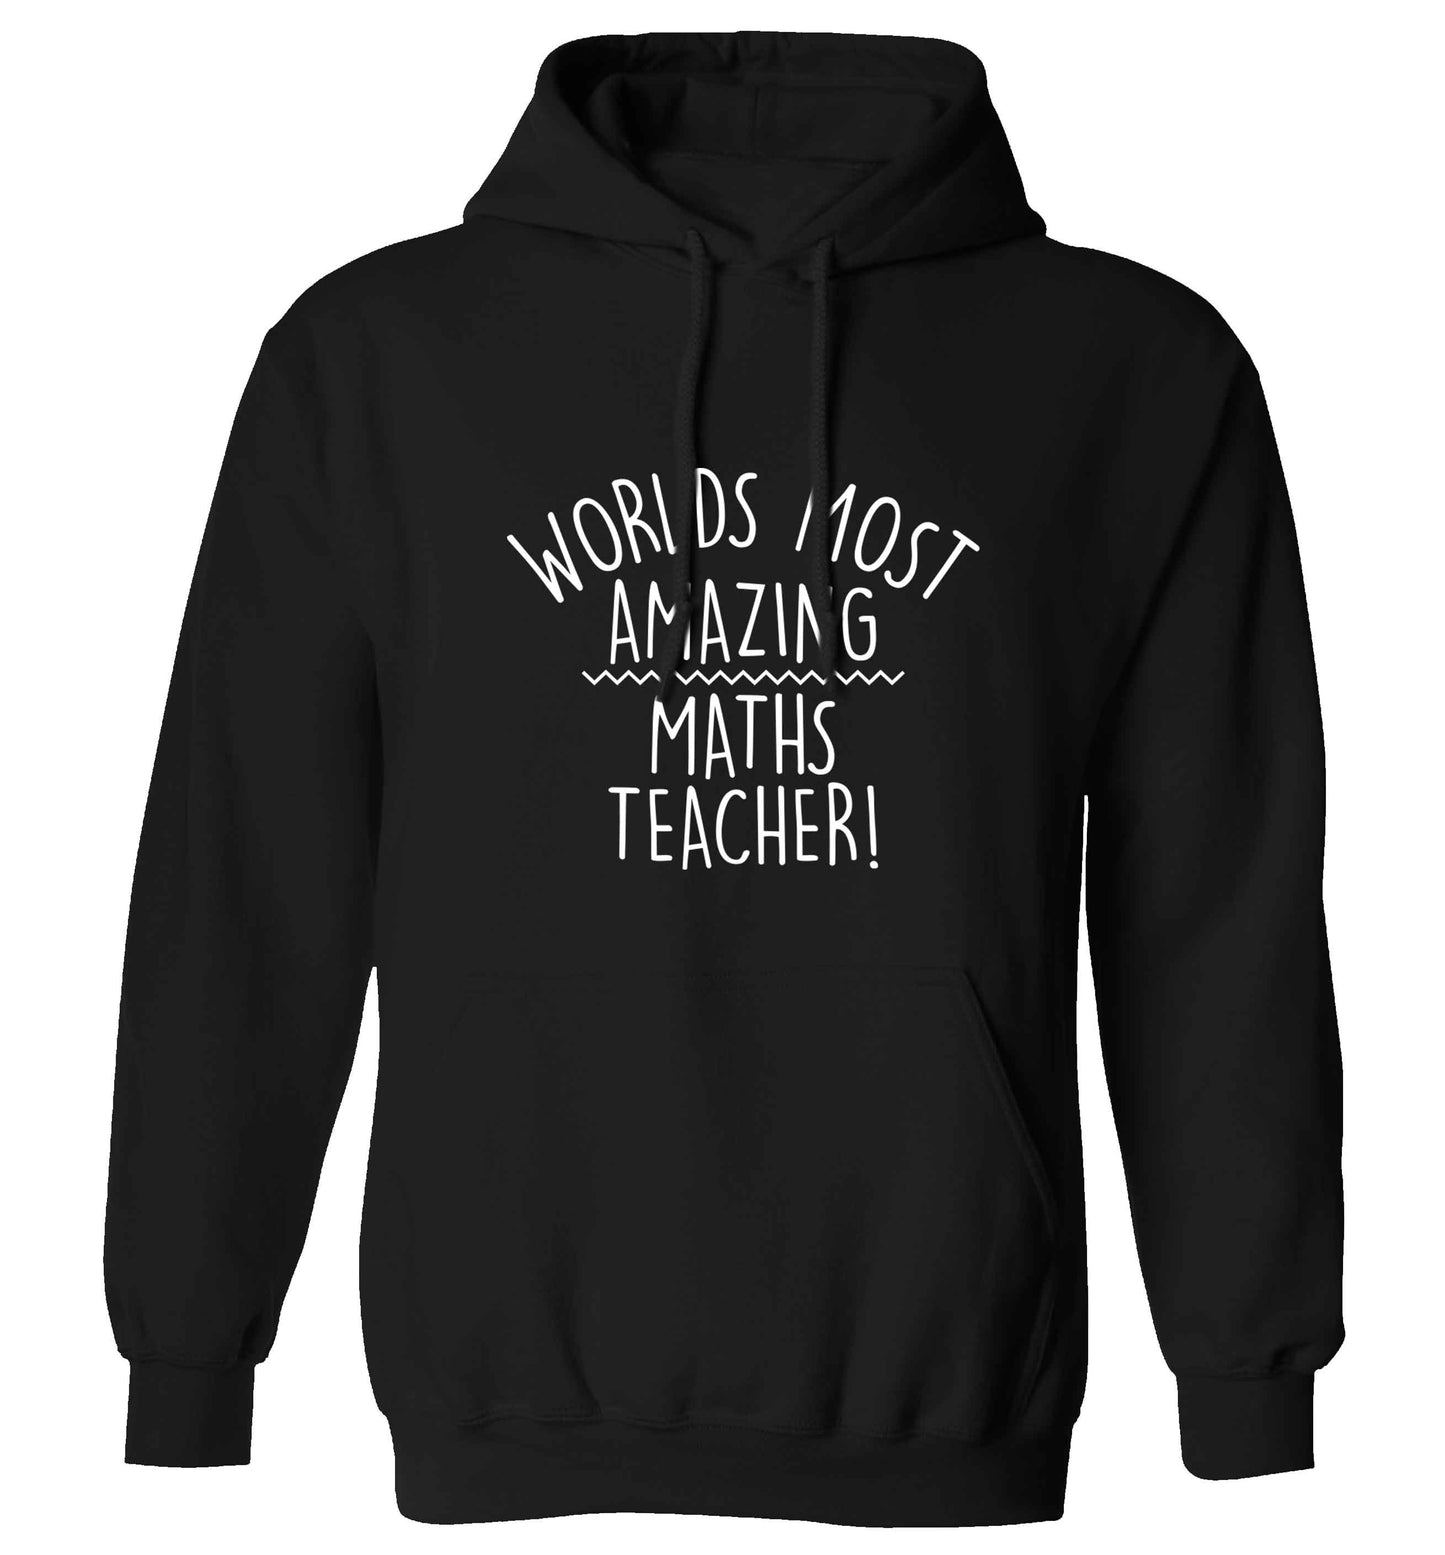 Worlds most amazing maths teacher adults unisex black hoodie 2XL